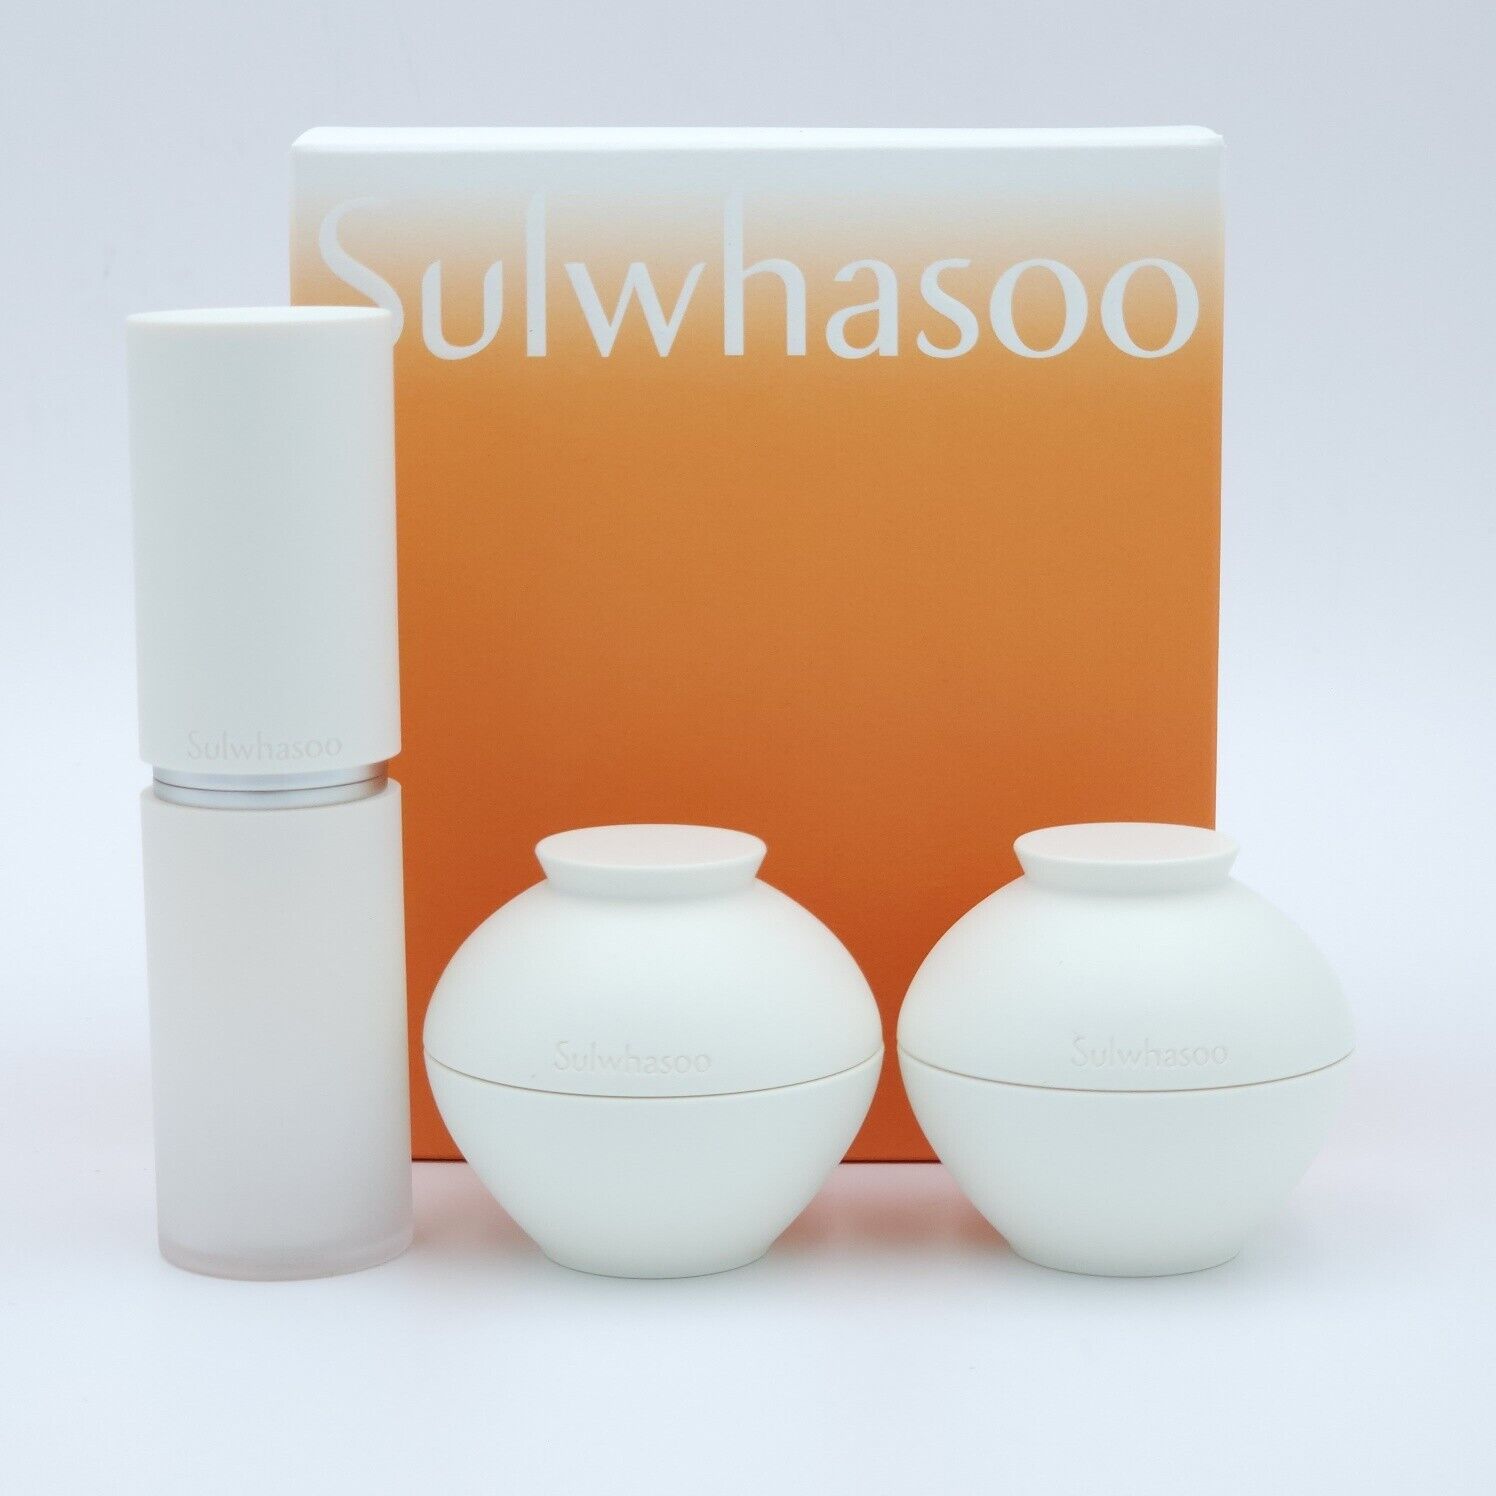 Sulwhasoo The Ultimate S Kit 3 Items Serum Eye Cream Anti Wrinkle K-Beauty